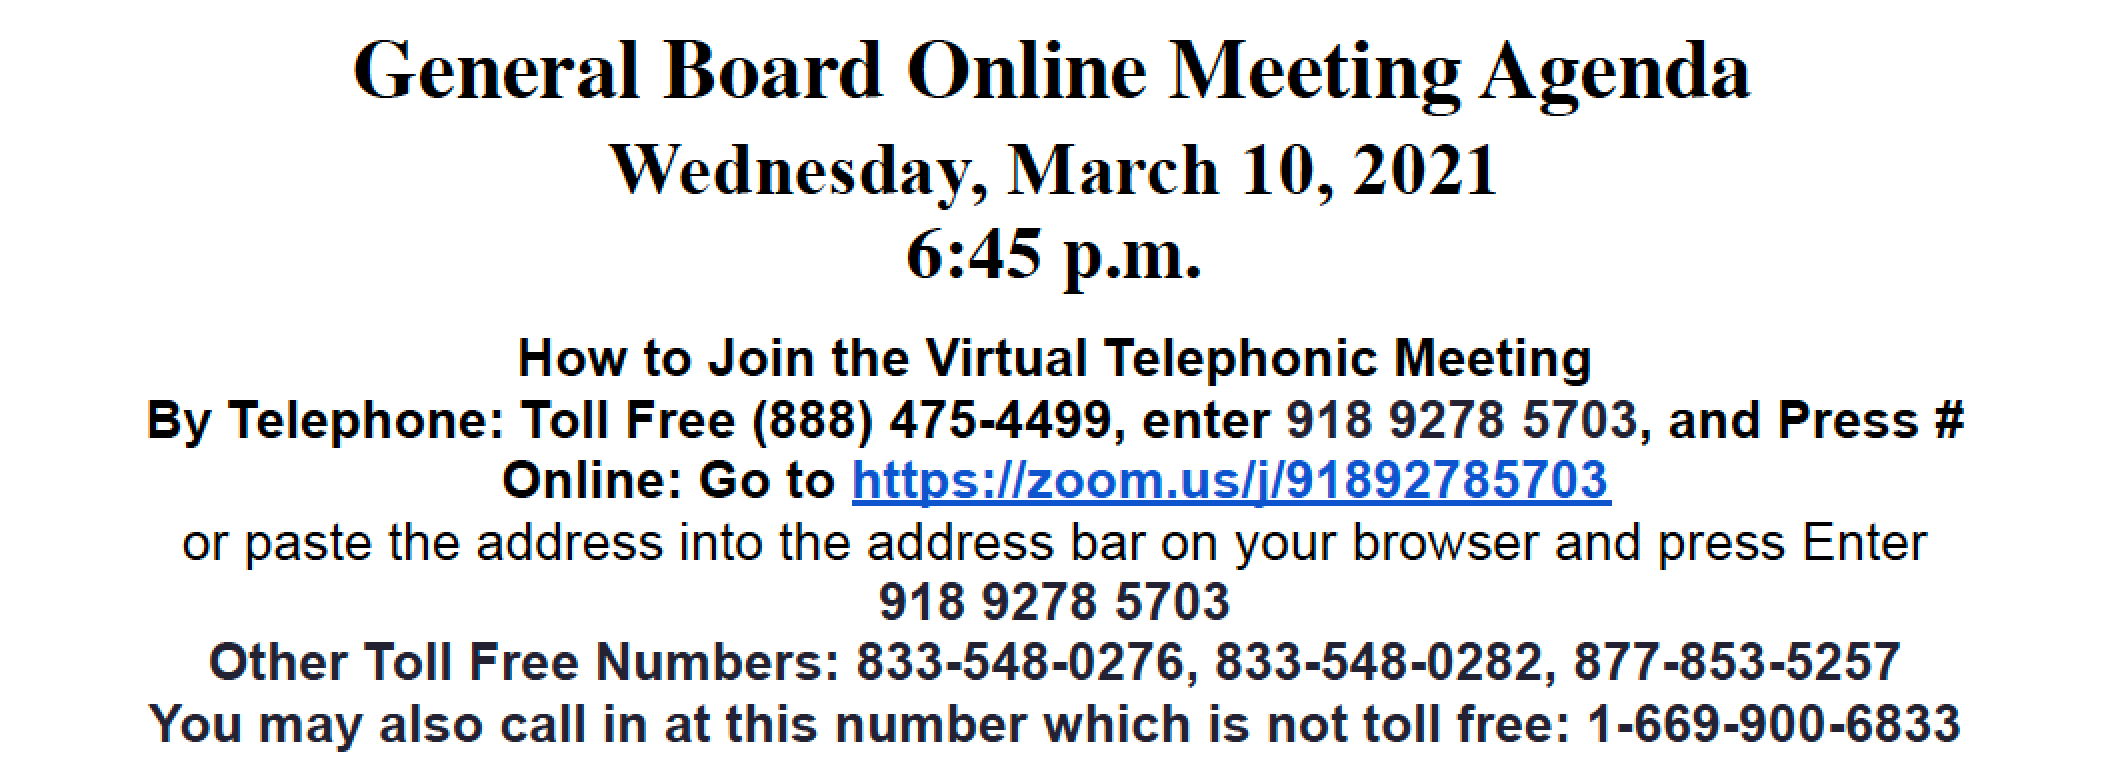 General Board Online Meeting Agenda 